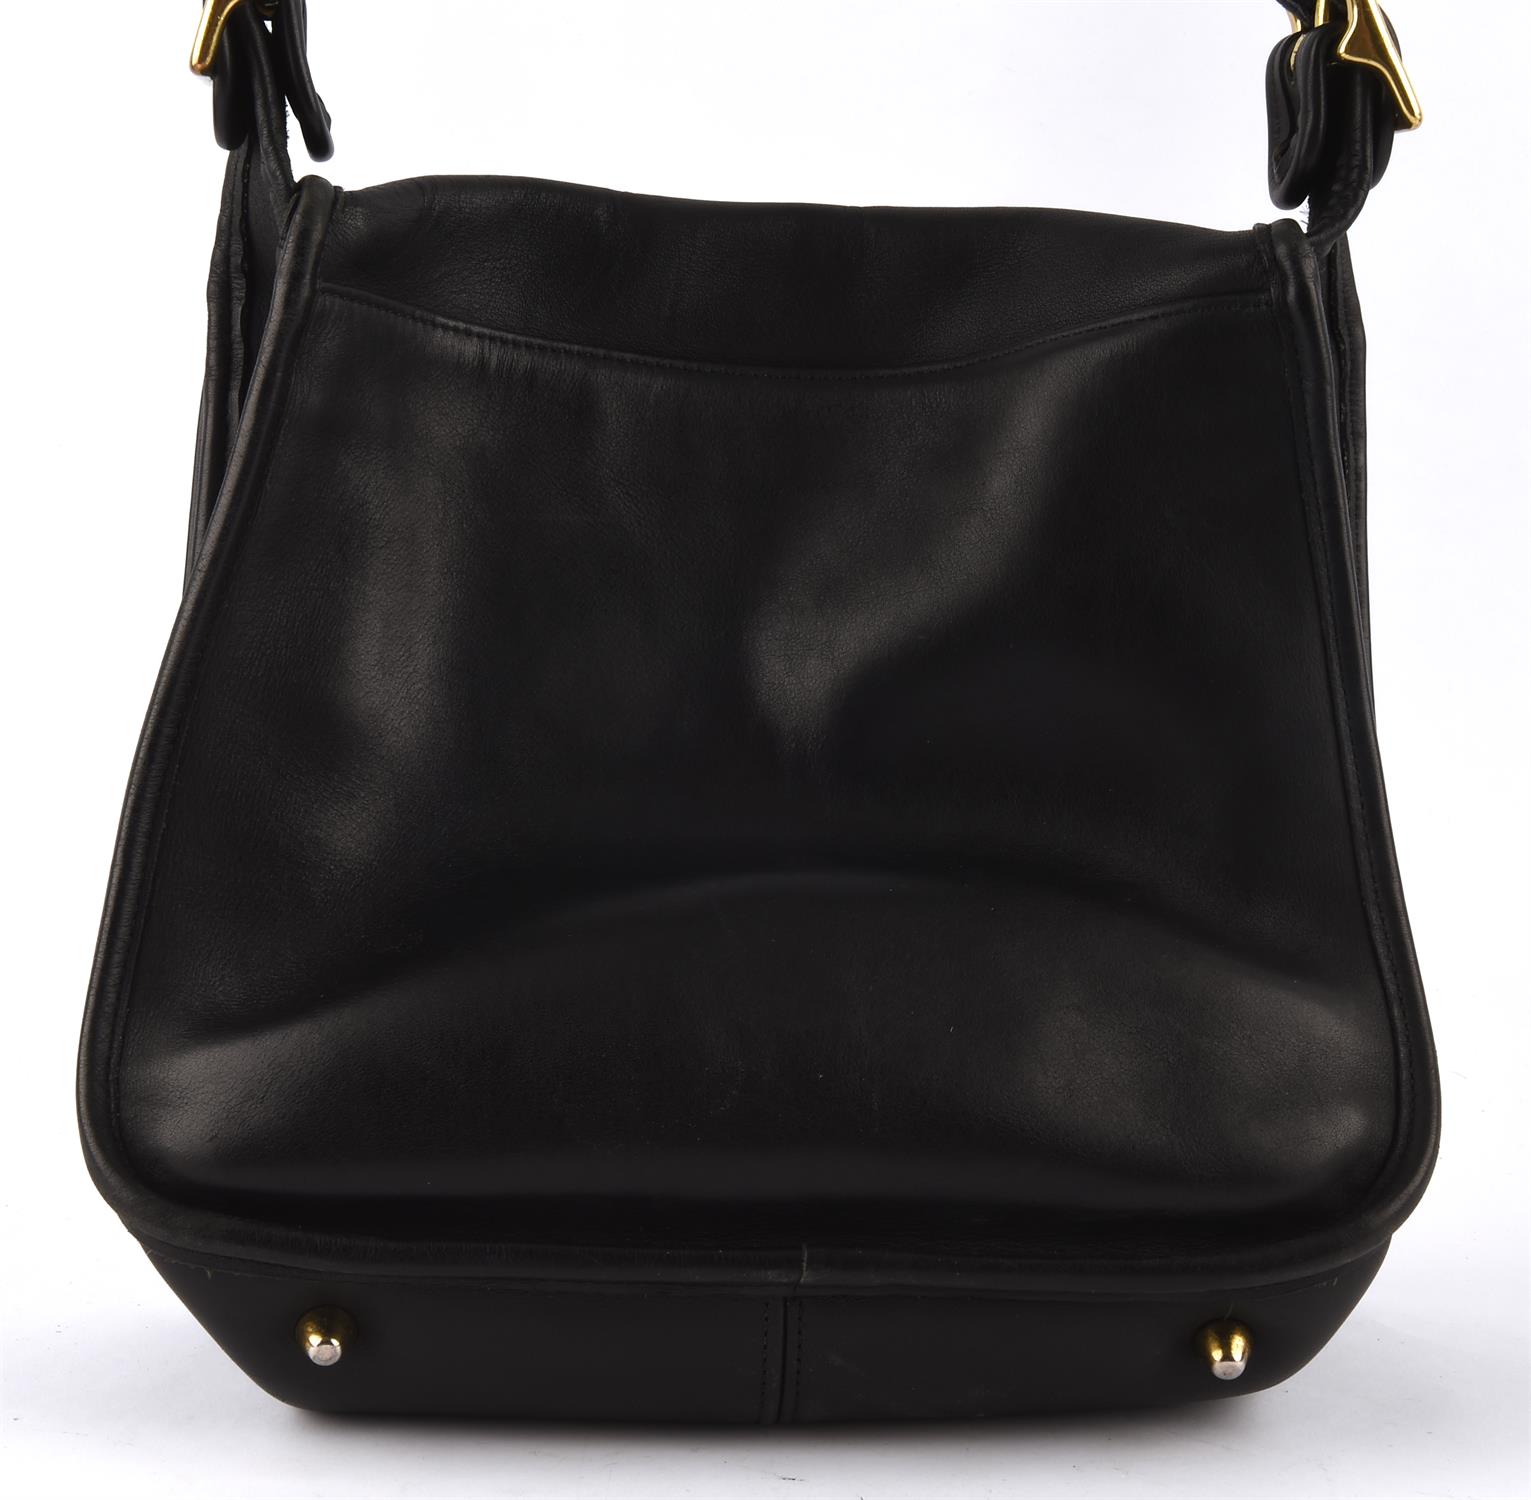 COACH black leather handbag (29cm x 26cm x 11cm) - Image 4 of 4